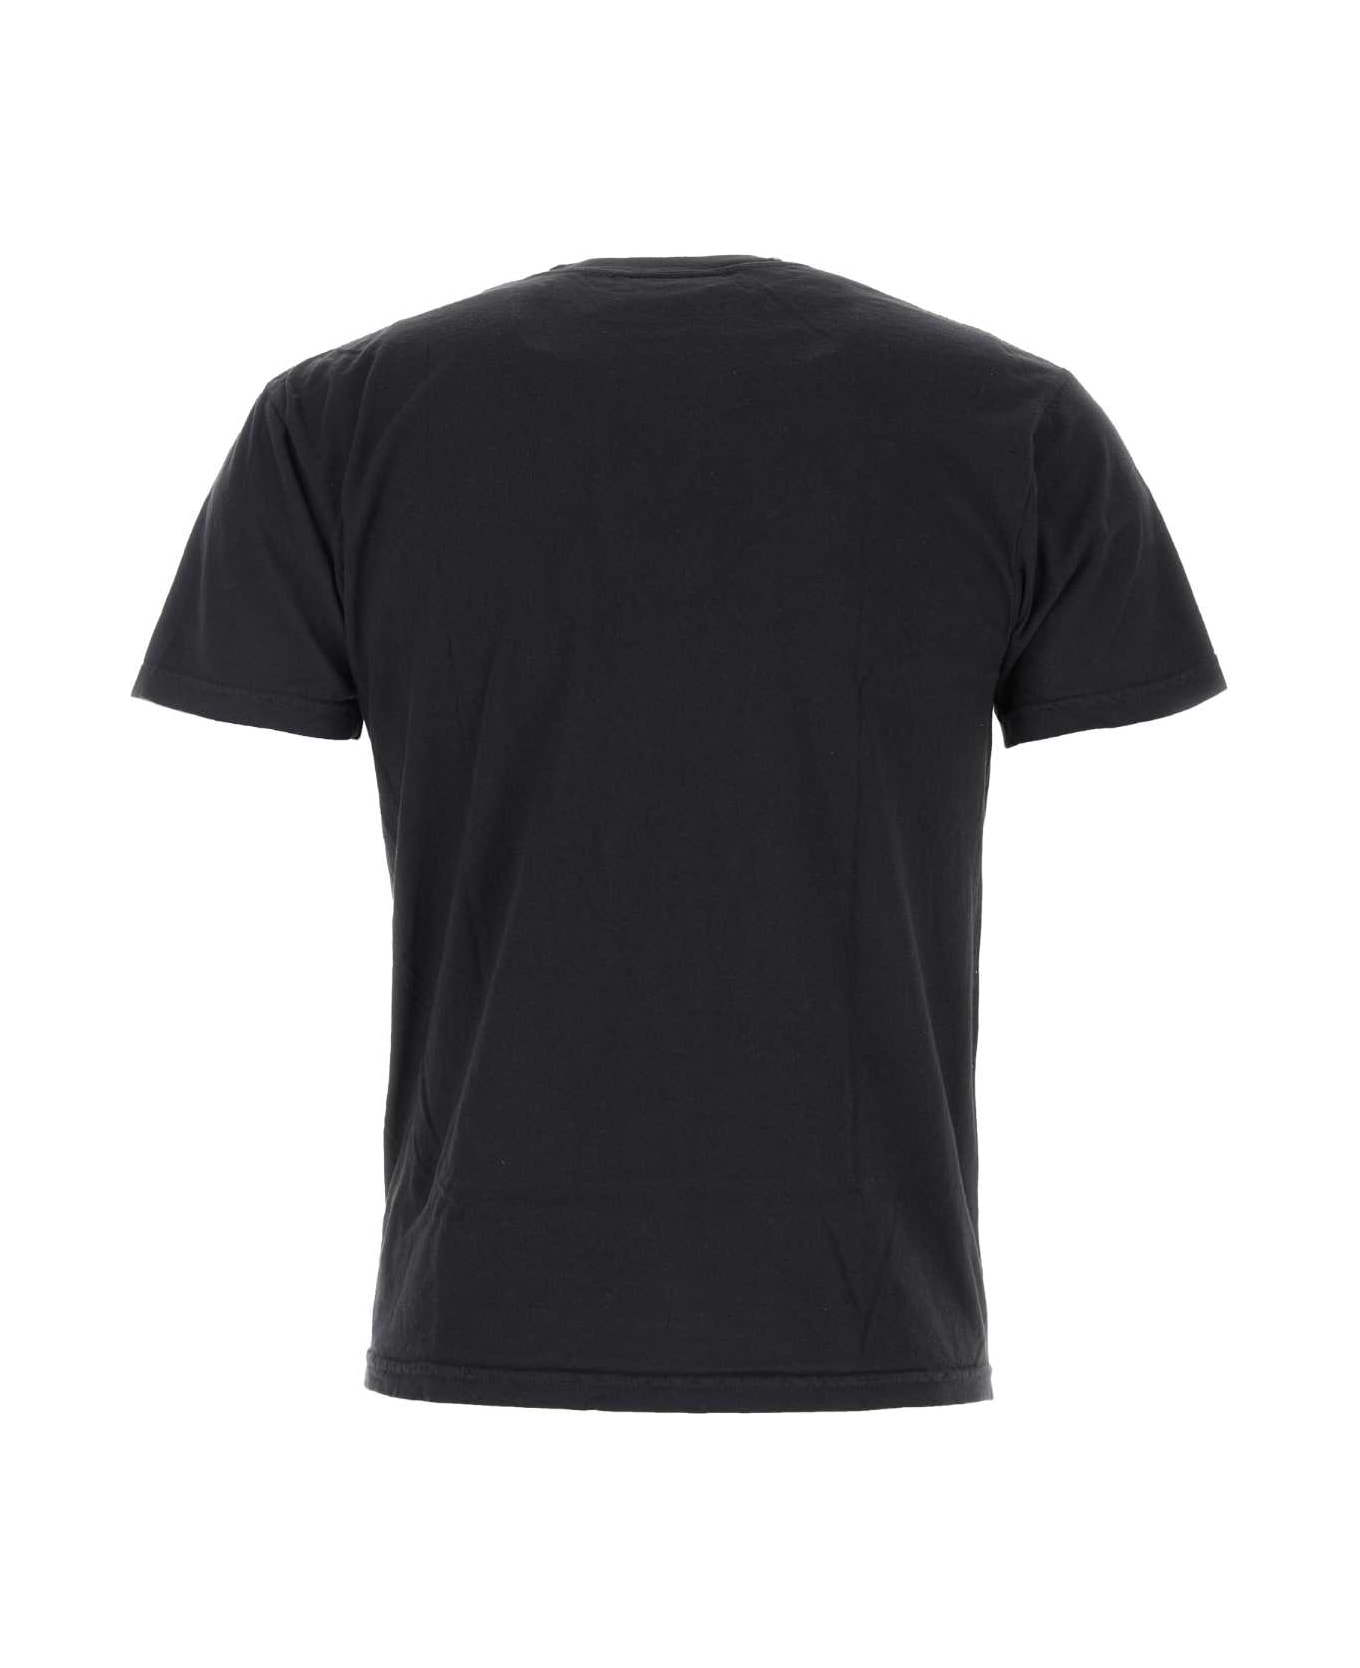 Kidsuper Black Cotton T-shirt - JAZZCLUB